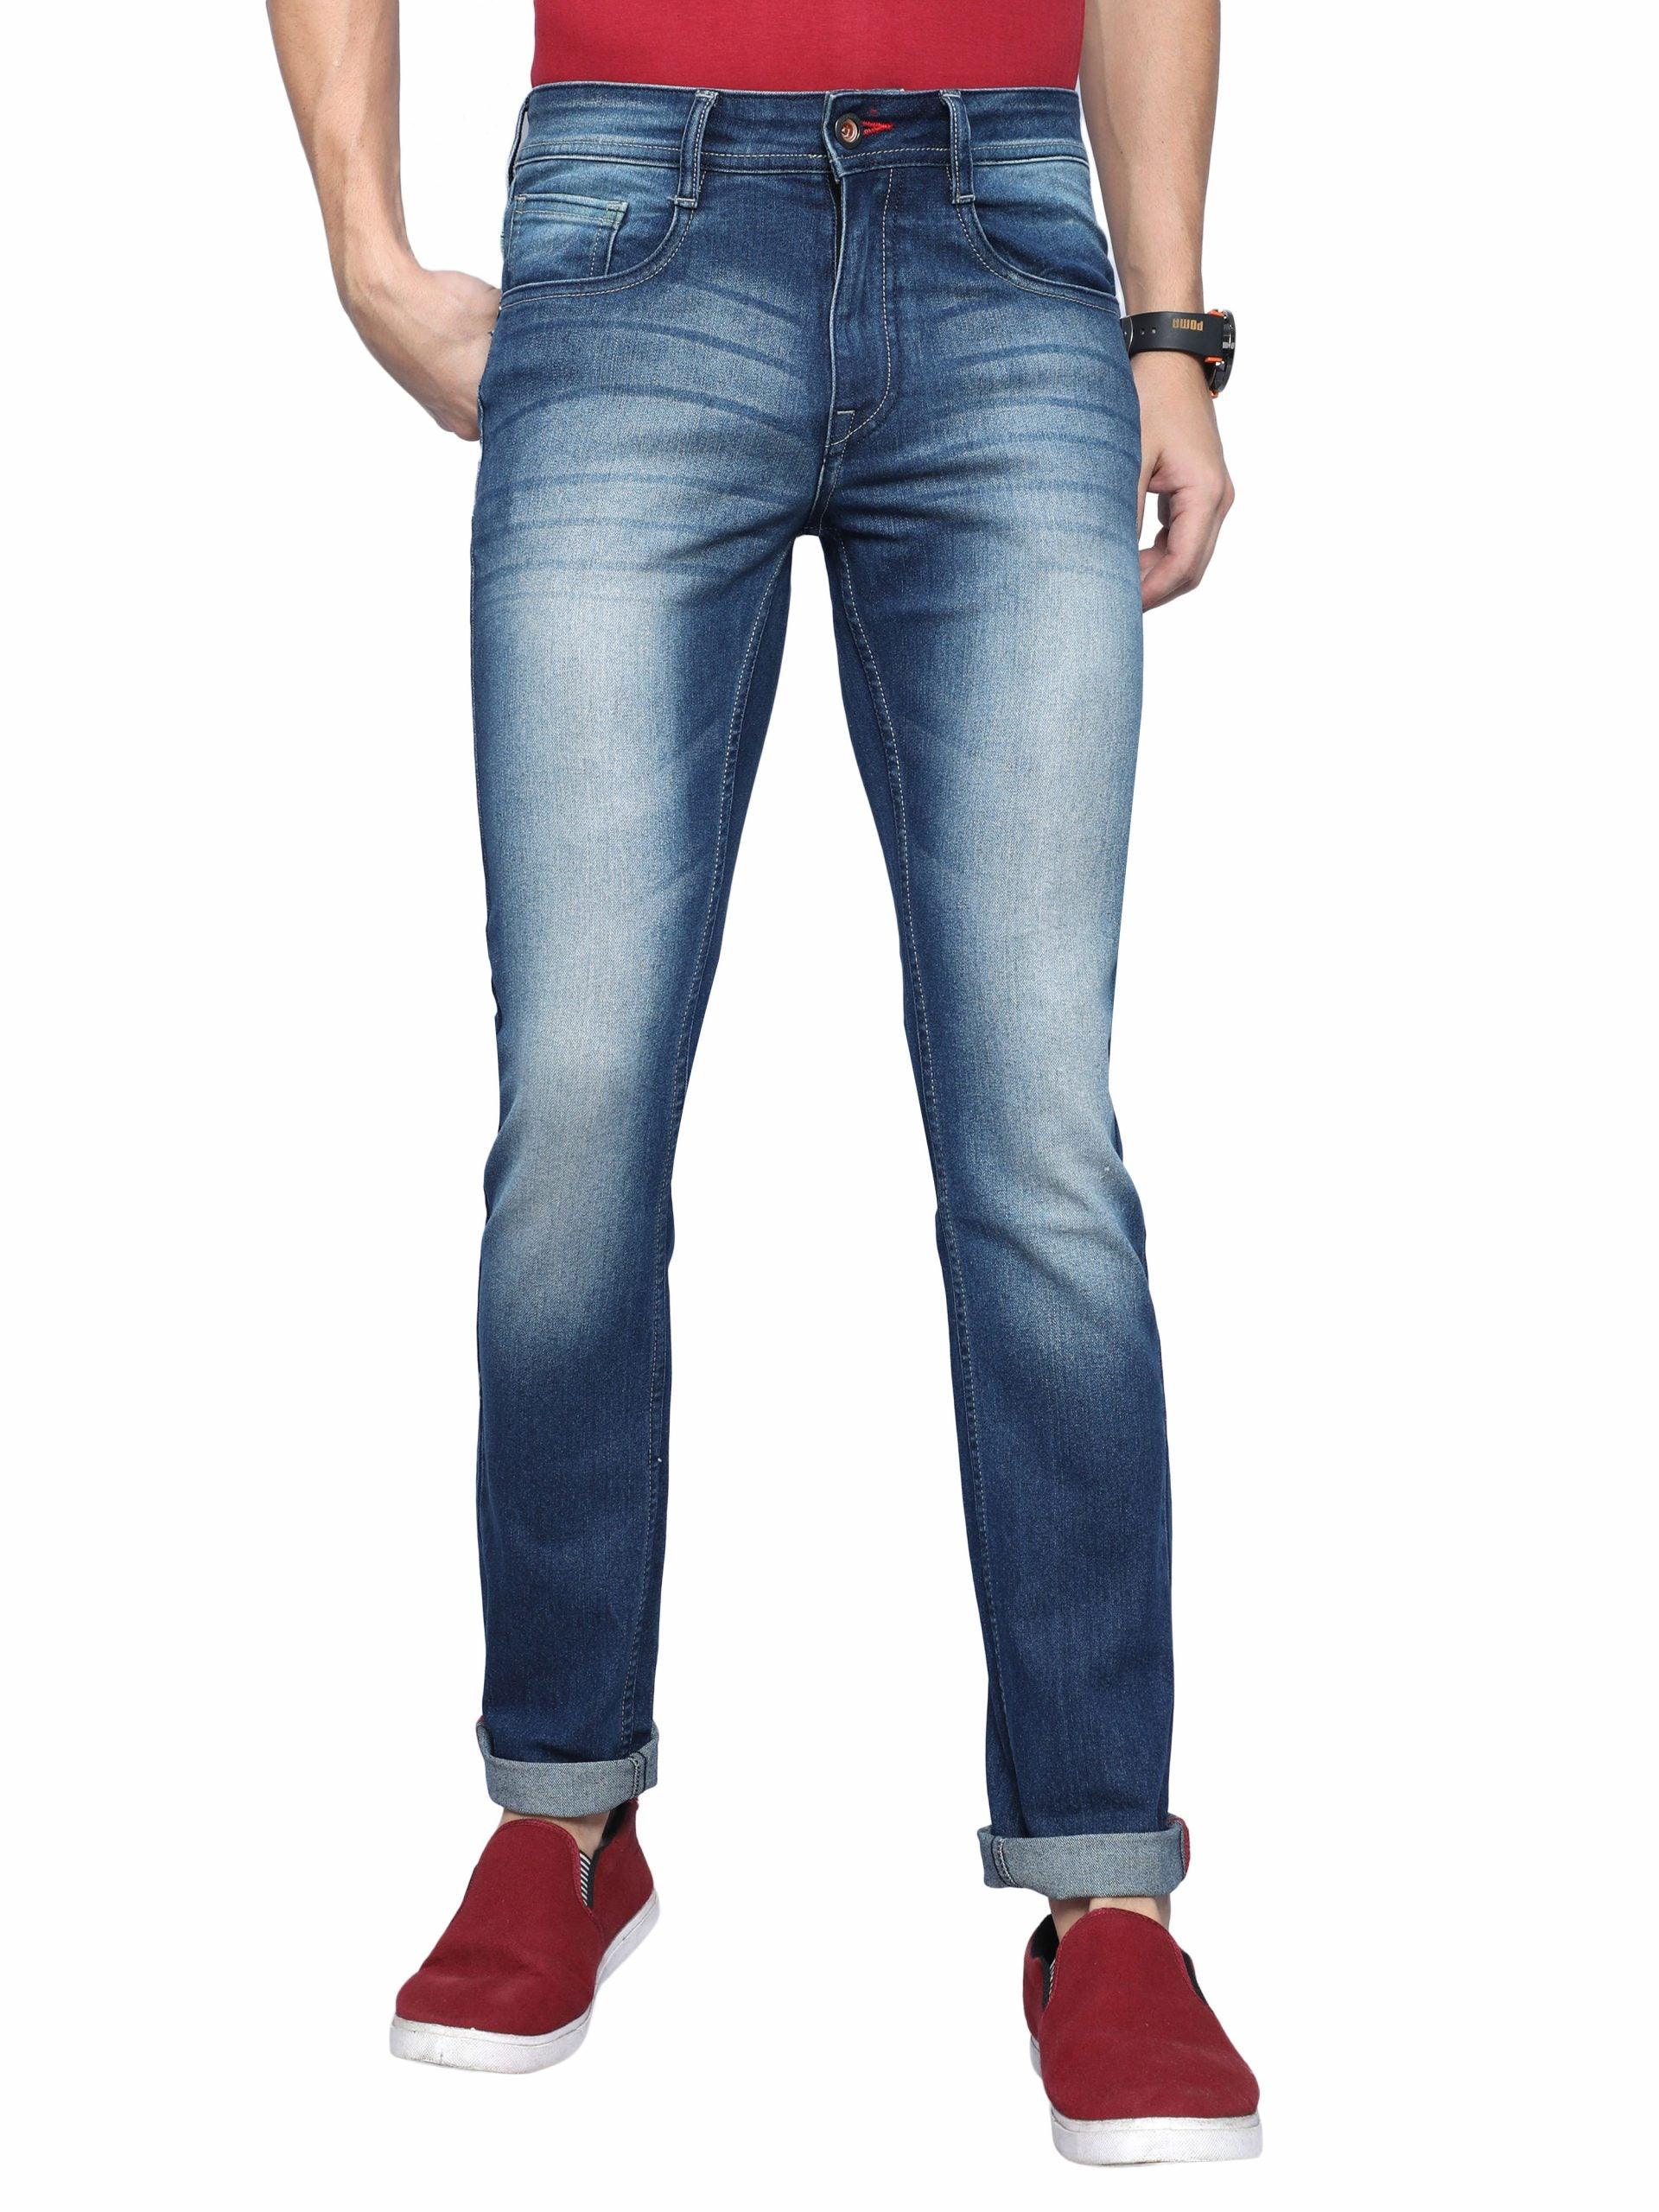 Men's Slim Fit Jeans - Blue - Triggerjeans